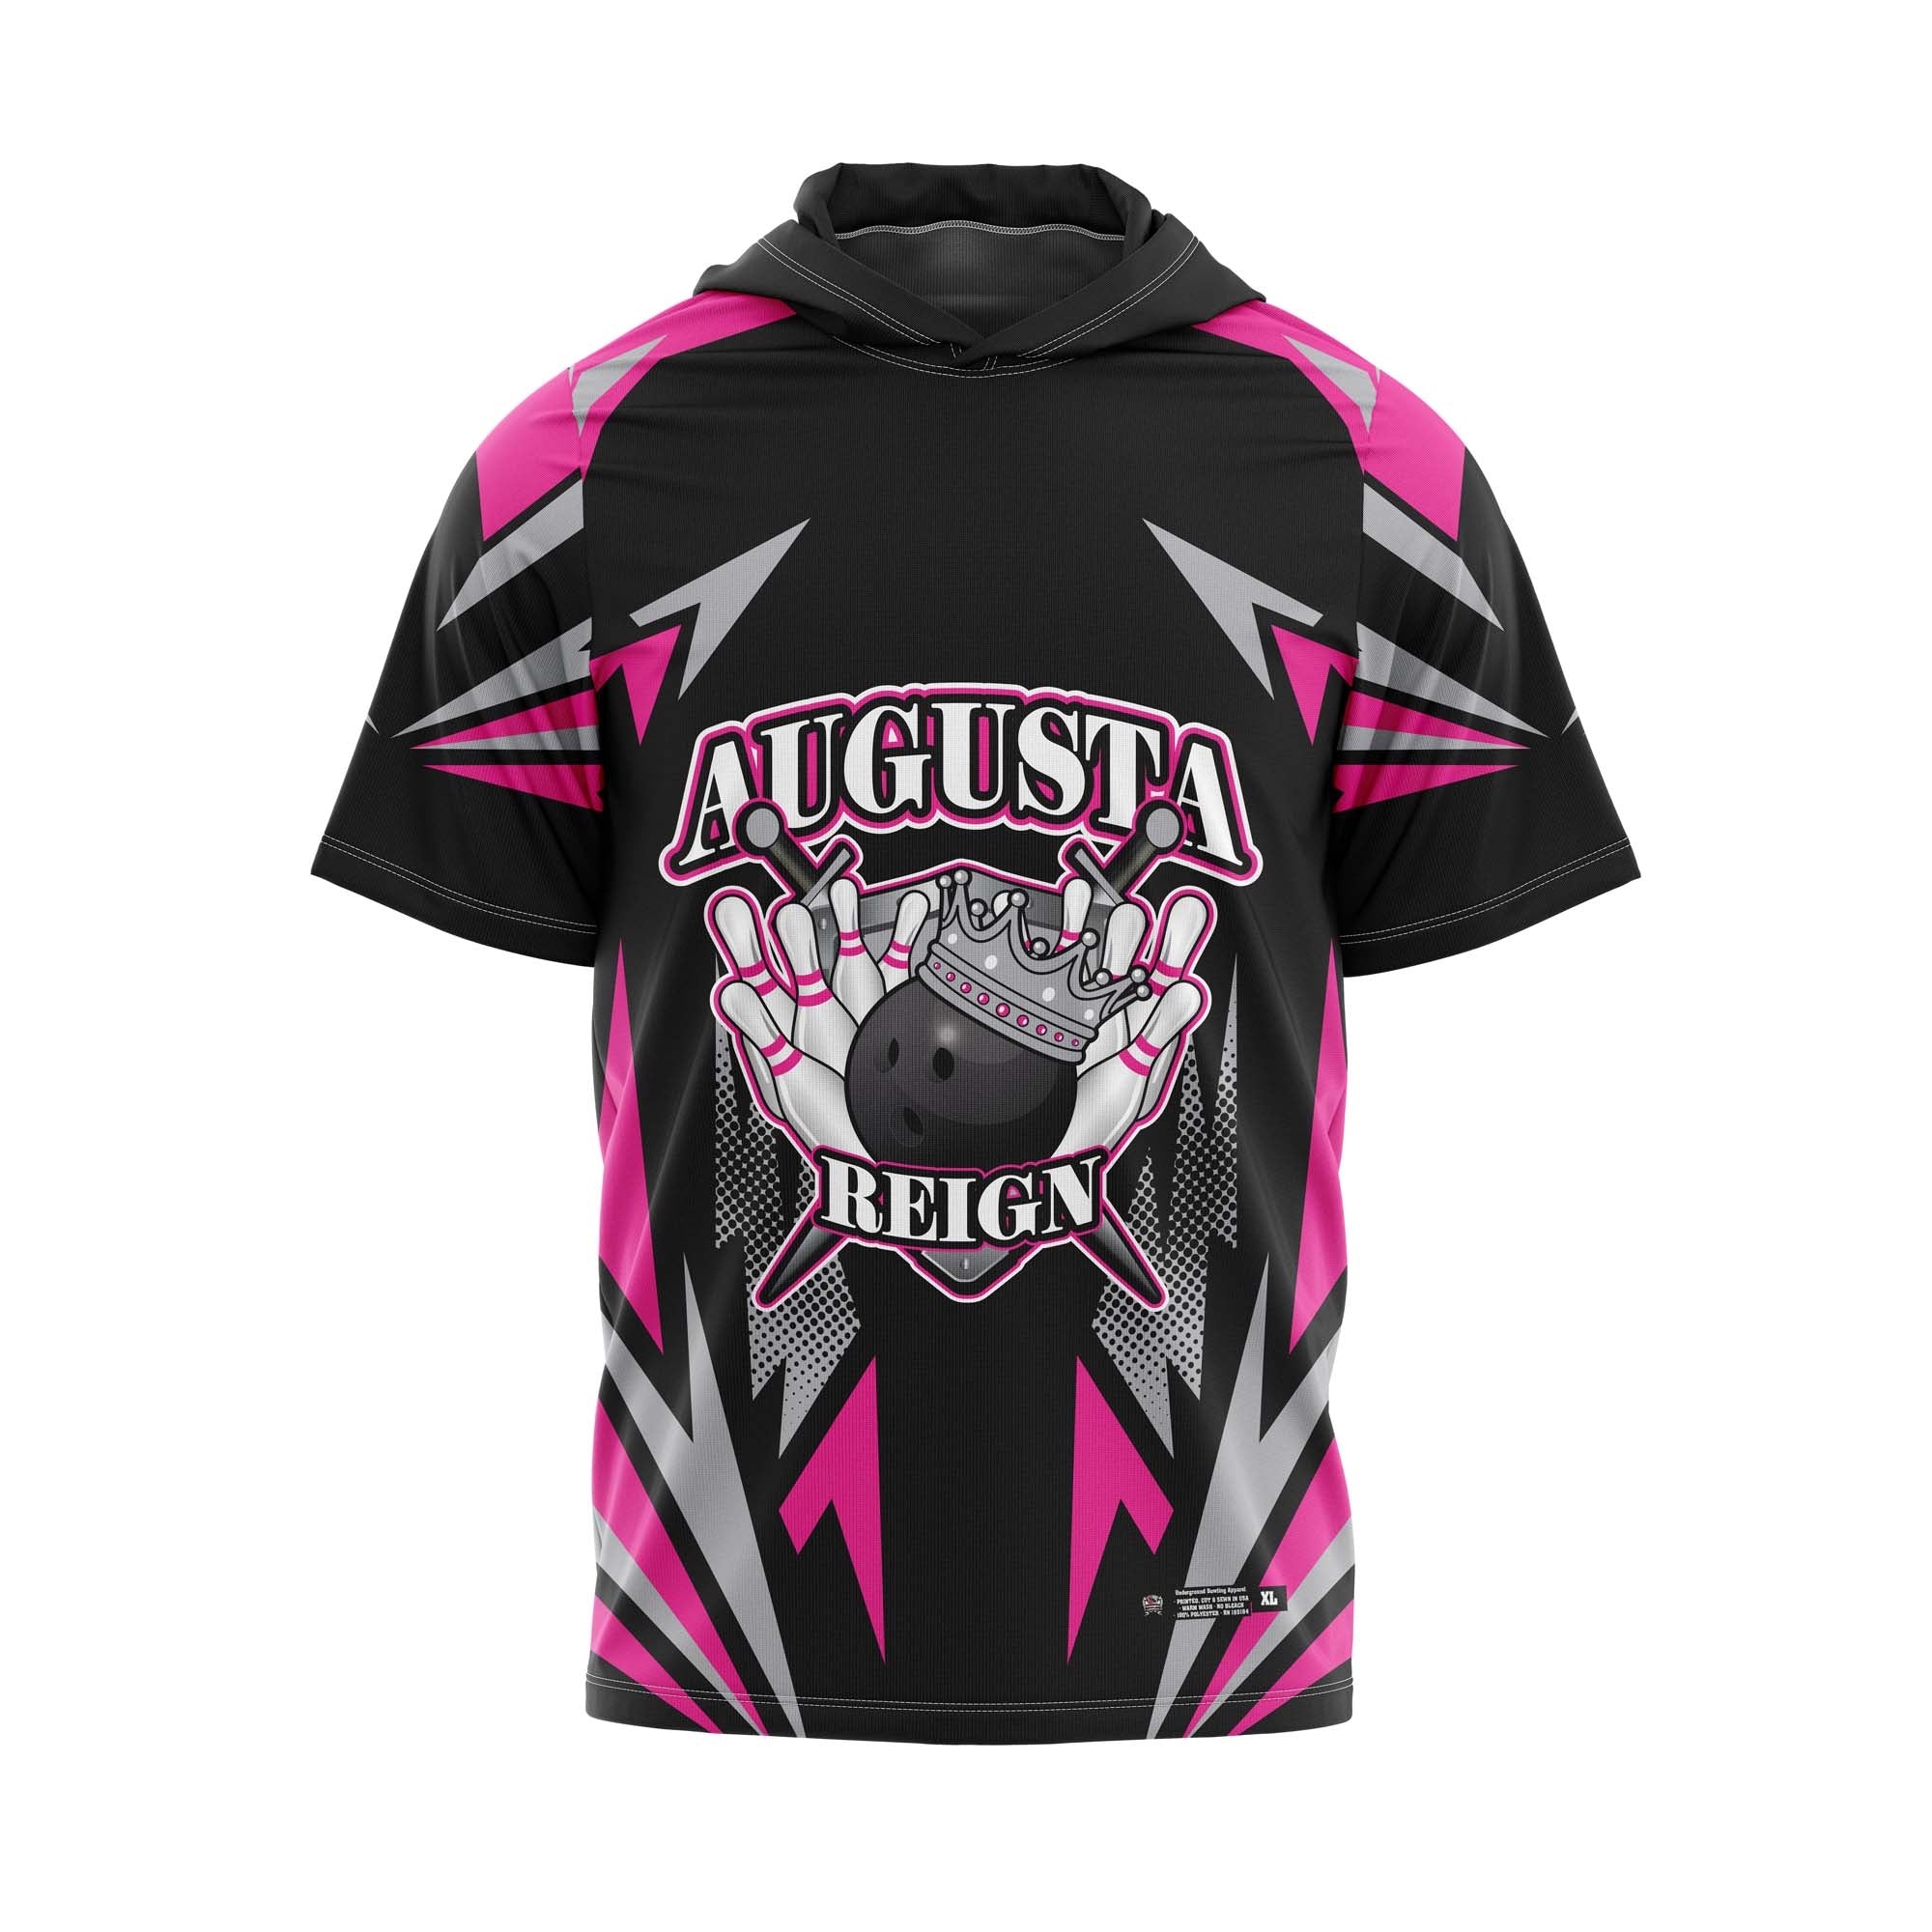 Augusta Reign Breast Cancer Jersey